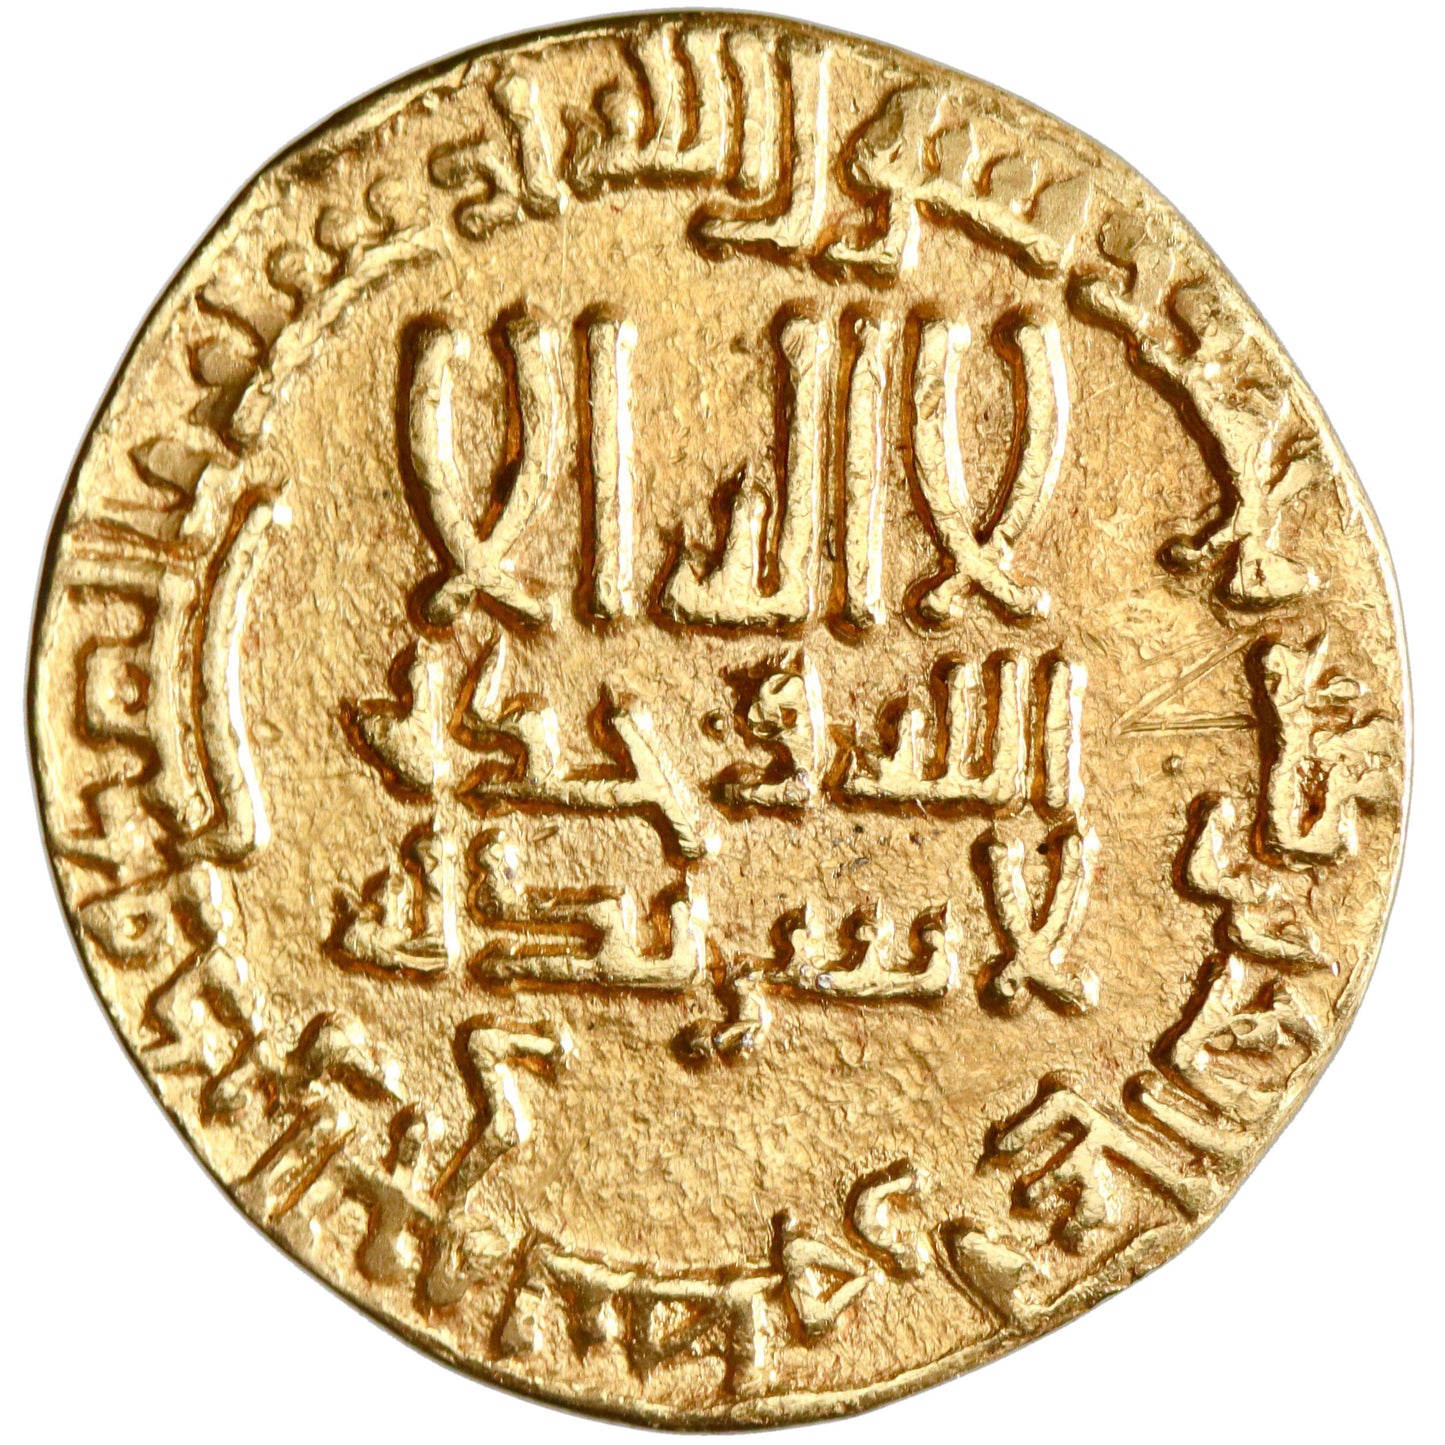 Abbasid, Harun al-Rashid, gold dinar, AH 170, citing 'Ali